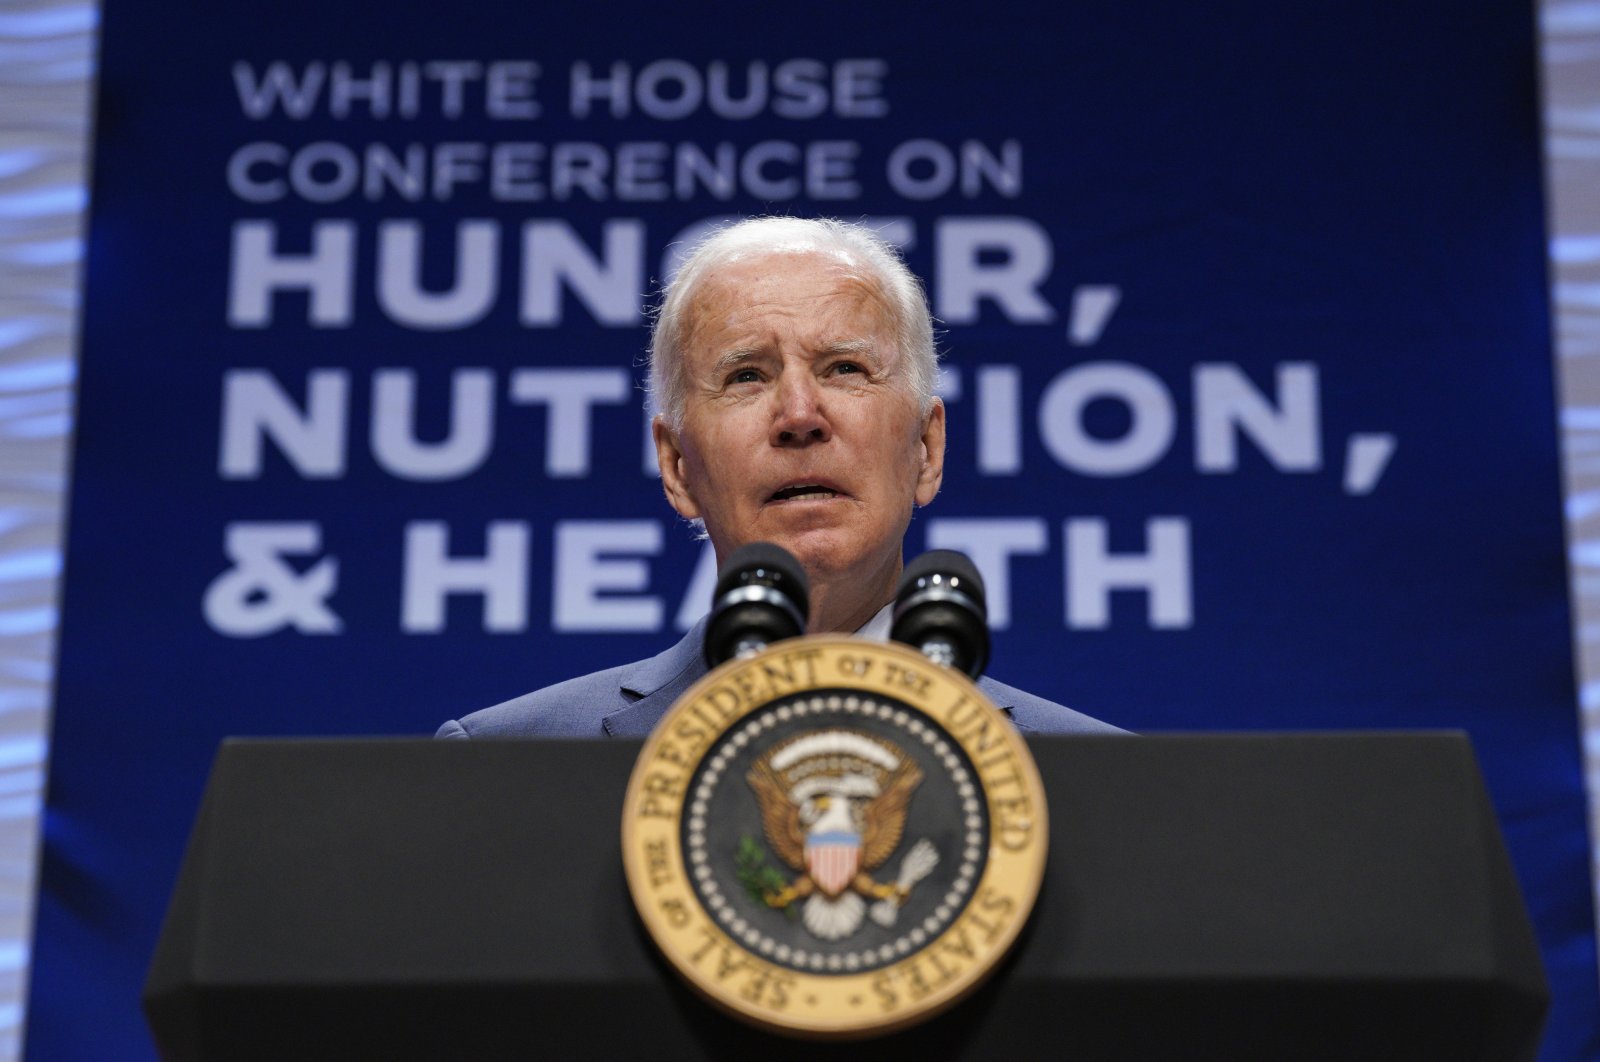 U.S. President Joe Biden speaks at the White House Conference on Hunger, Nutrition, and Health, Washington, D.C., U.S., Sept. 28, 2022. (EPA Photo)